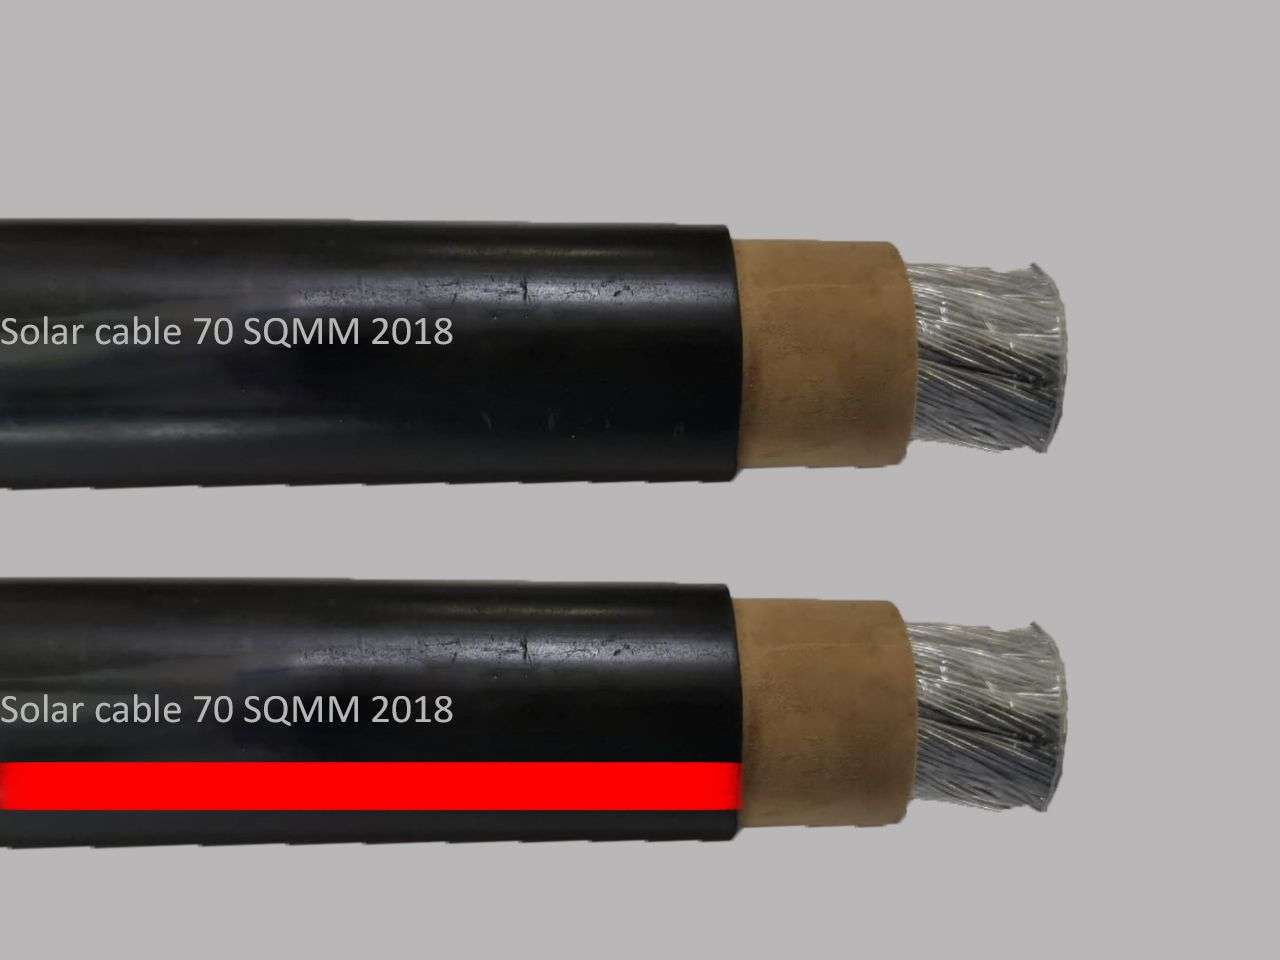 apar-solar-cable-70-sq.m-atc-xlp-black_en-1000-mtr-roll.jpg